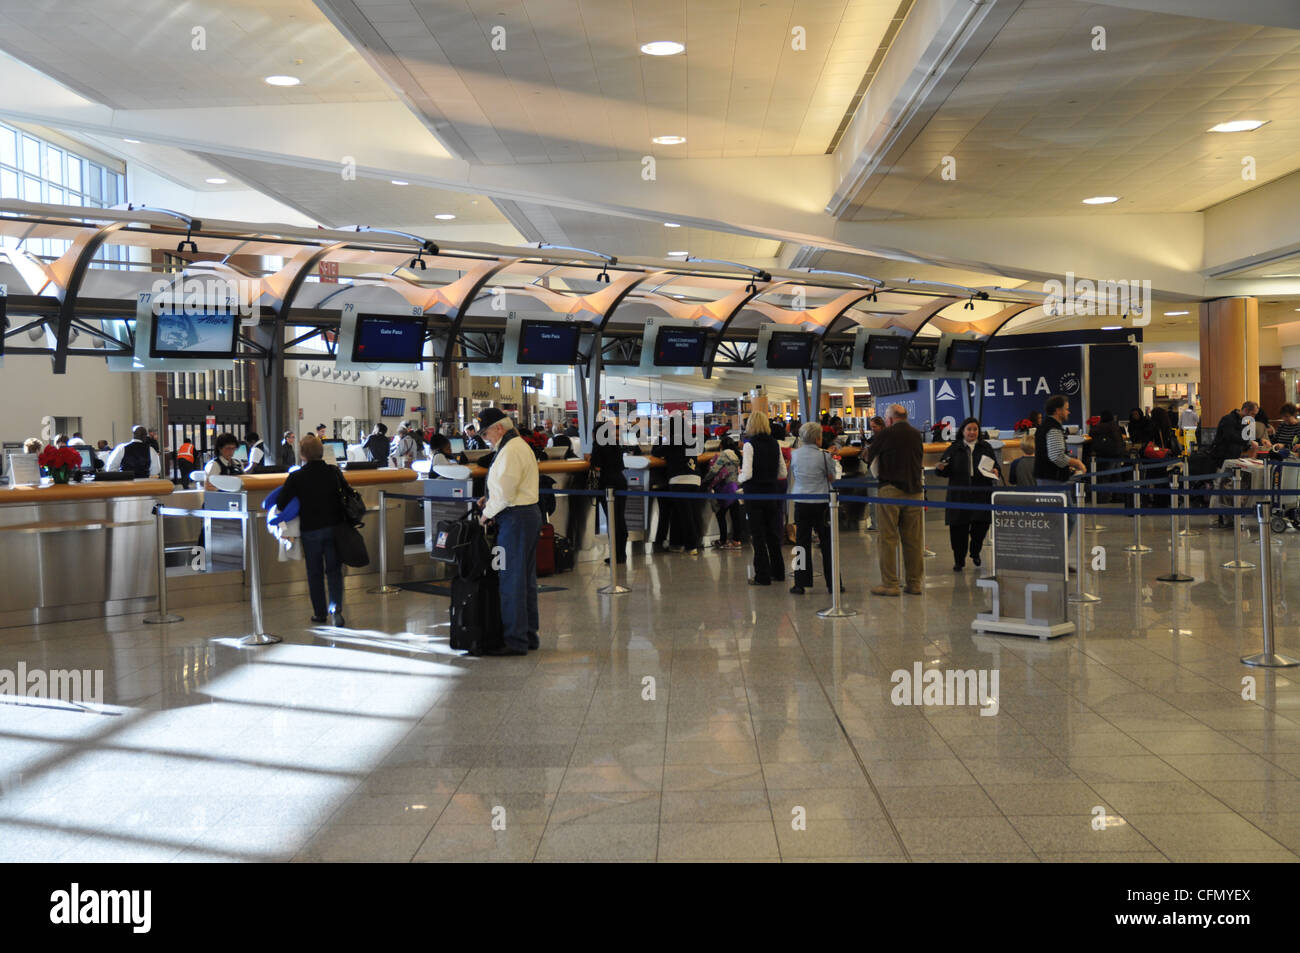 Check in for Delta Air Lines at Atlanta International Airport. Stock Photo